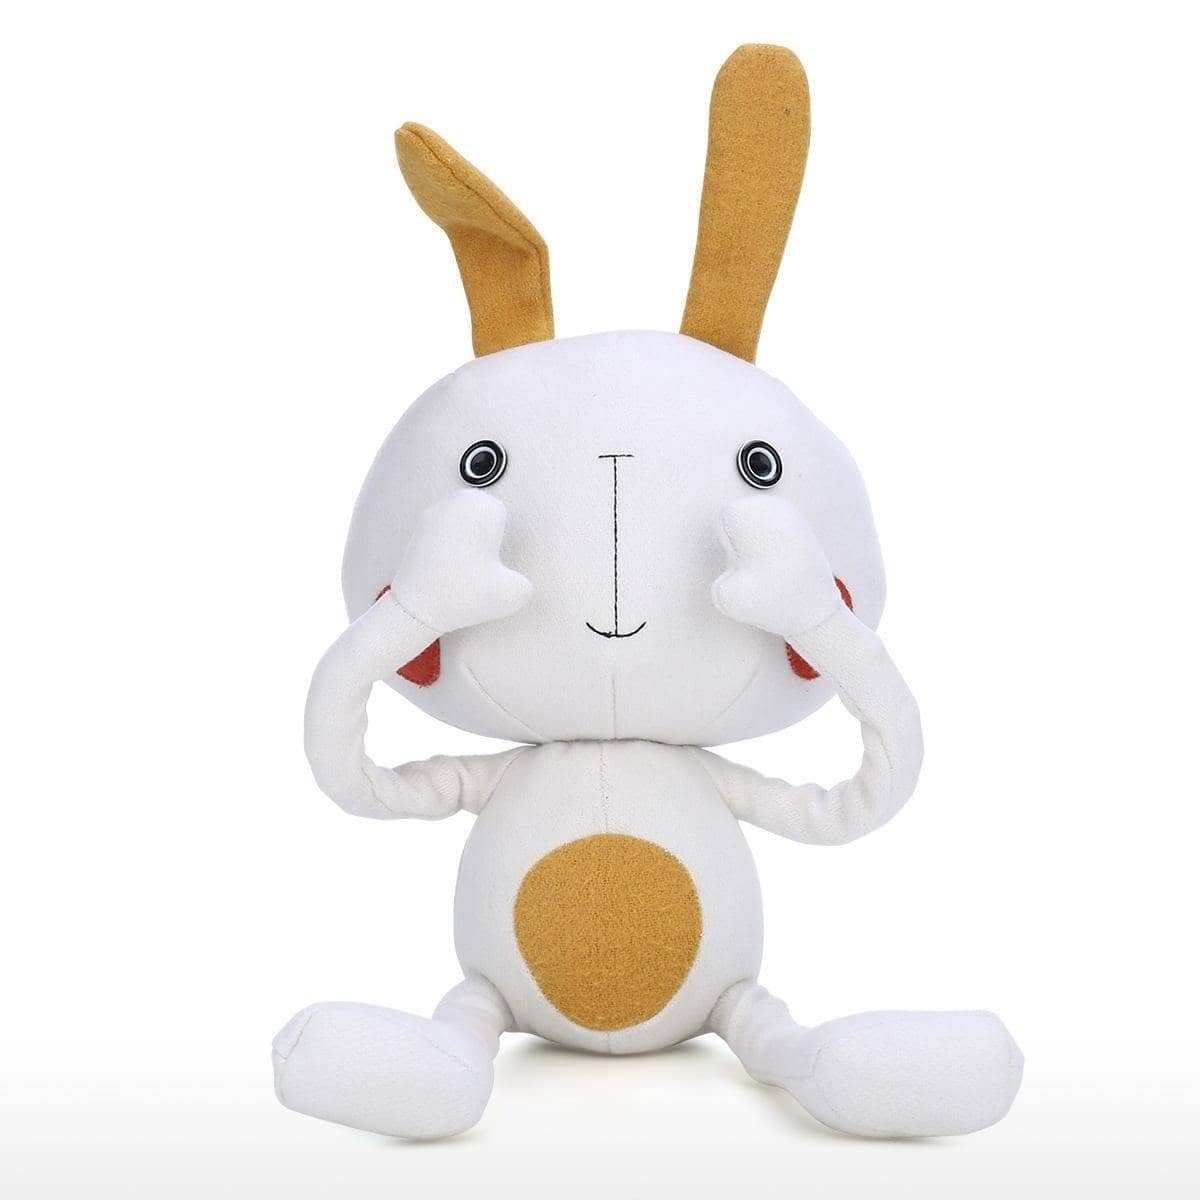 Yoga Bunny Cartoon Doll Toy - Cute & Playful Yoga Companion